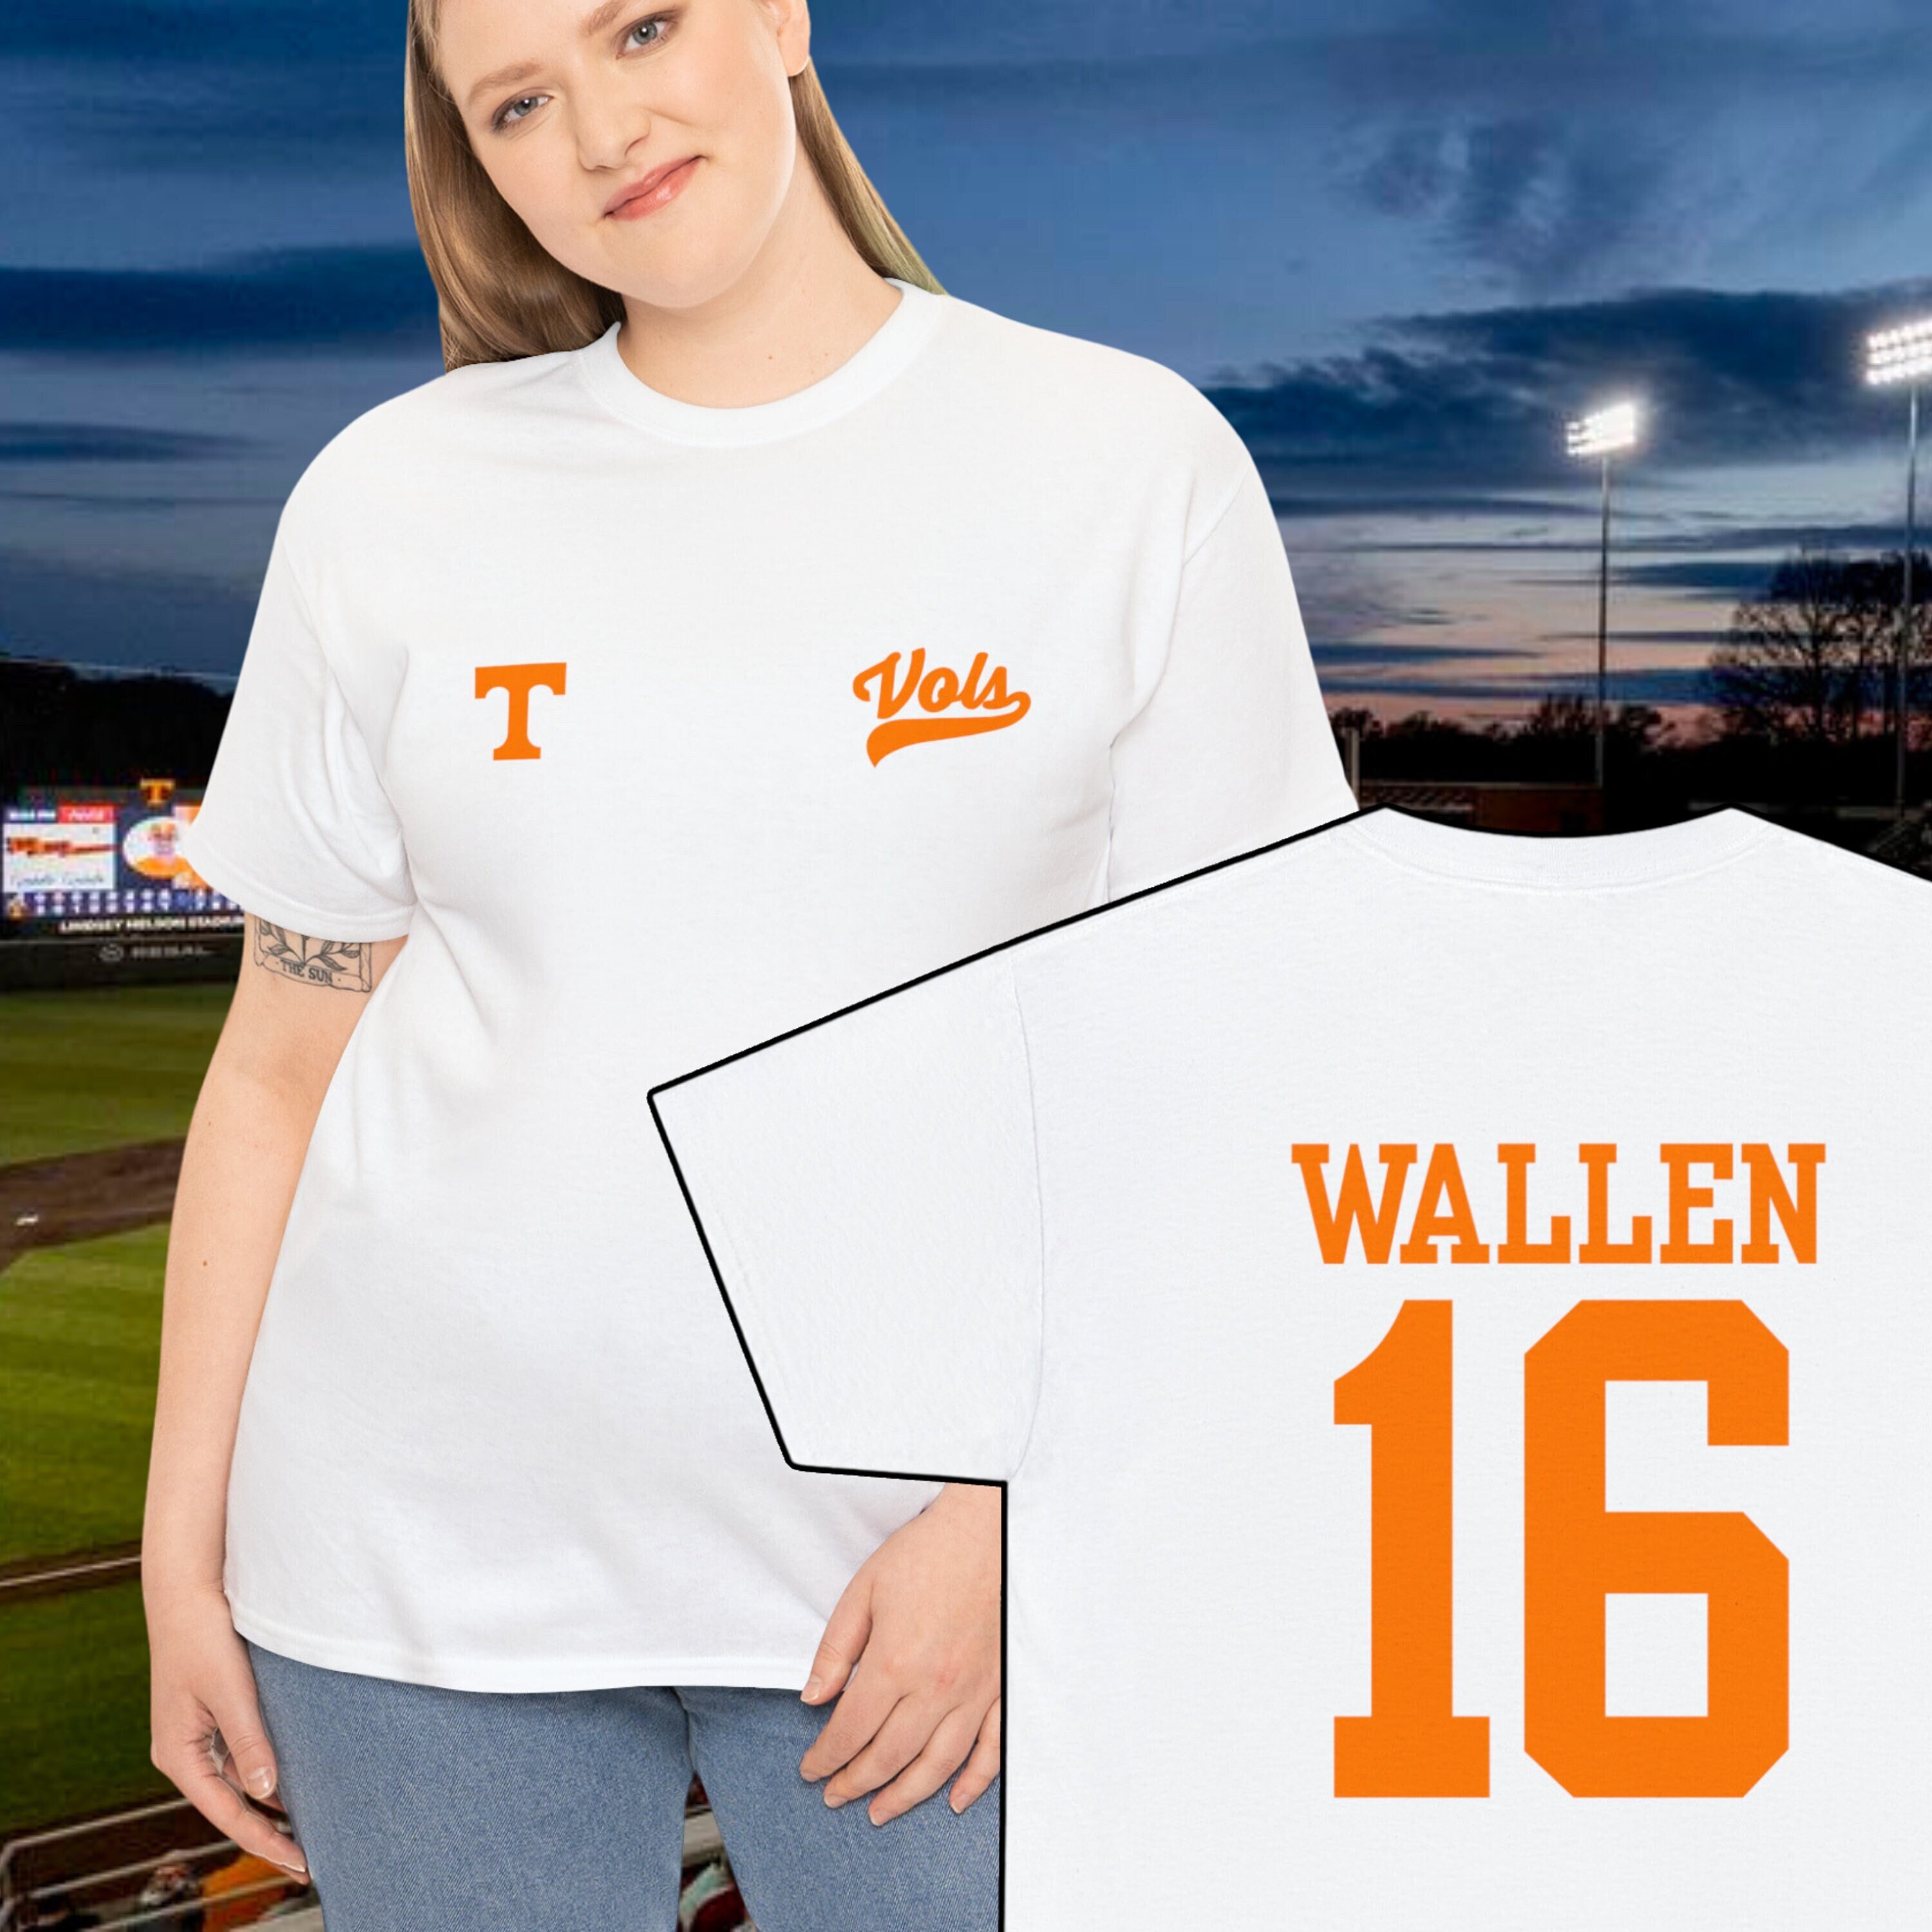 Vols Baseball Jersey Wallen 16 Shirt Morgan Wallen Shirts Country Music  Shirt Gift For Fan Tennessee Vols Baseball Jersey Mlb Tennessee Volunteers  Baseball Uniform - Laughinks